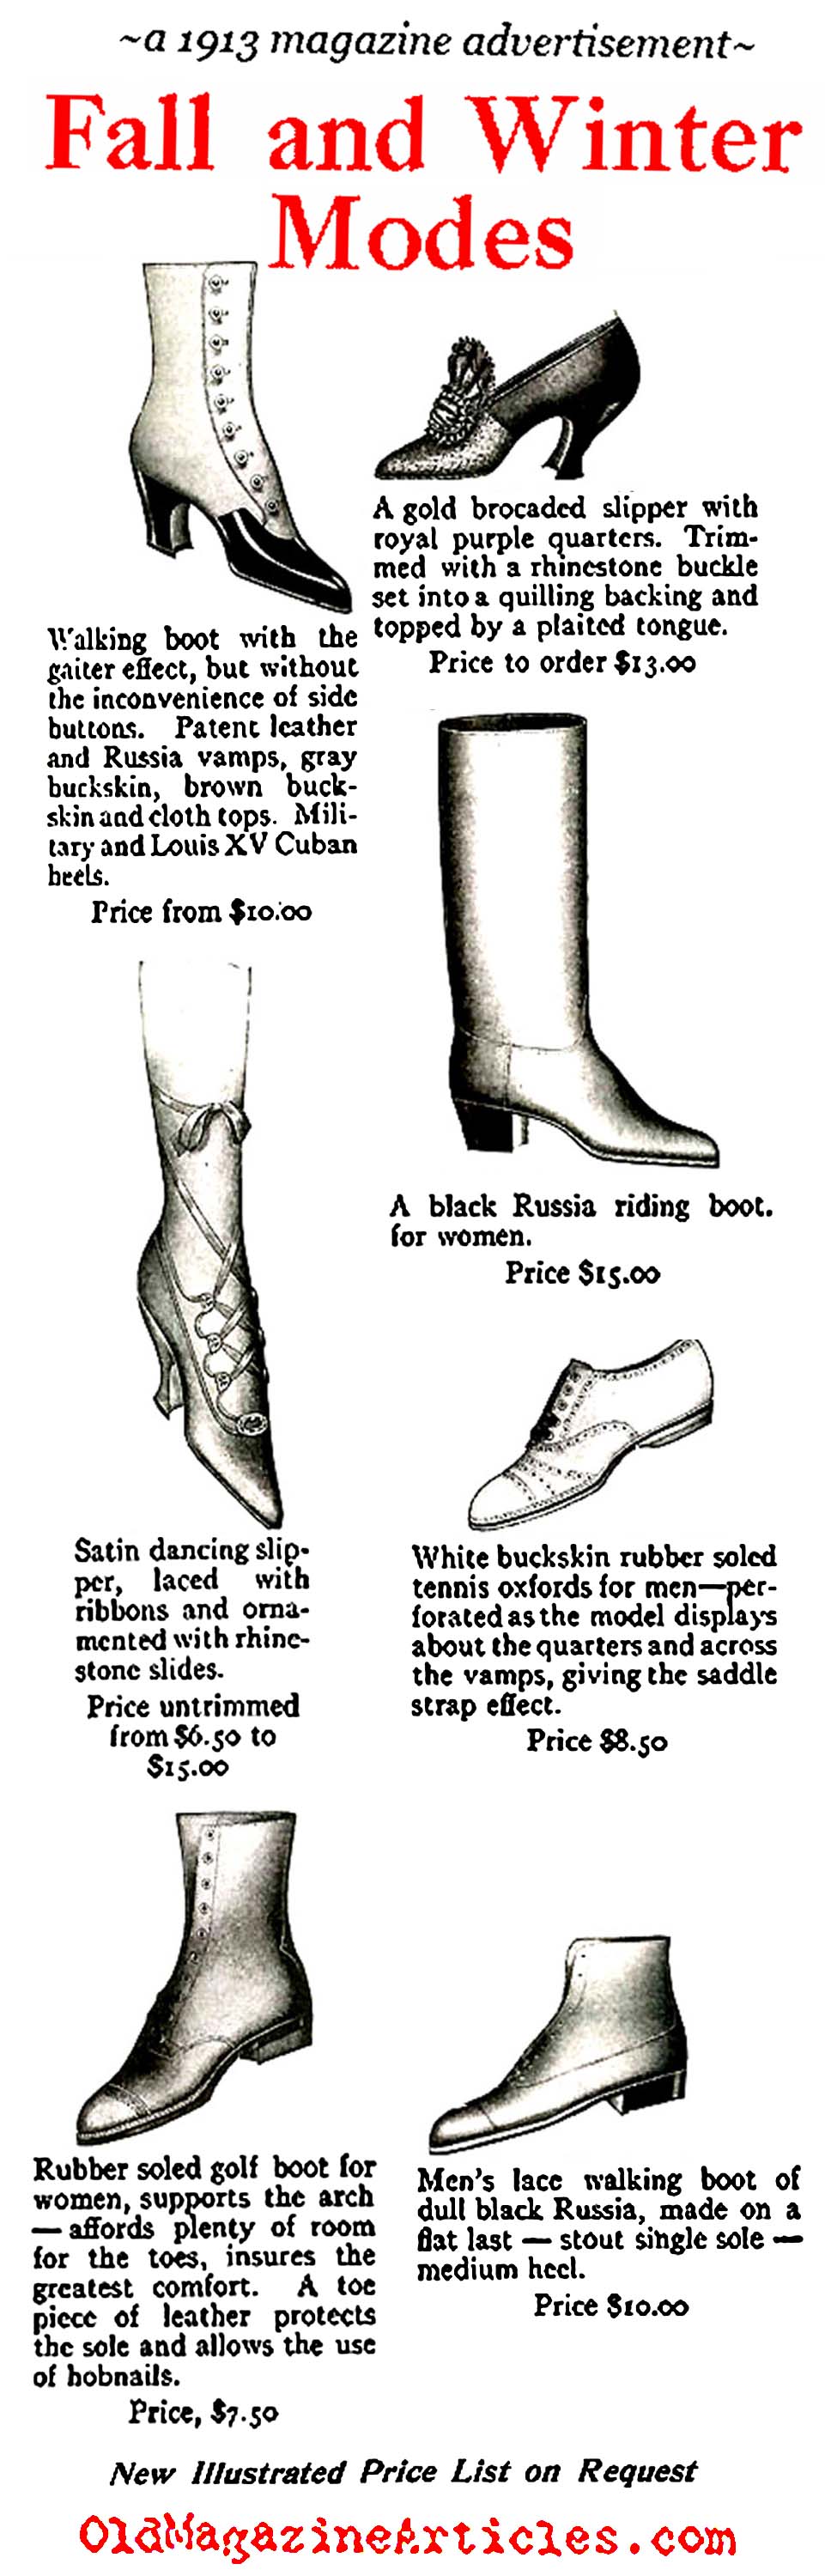 Shoe Illustrations (1913 Advertisement)